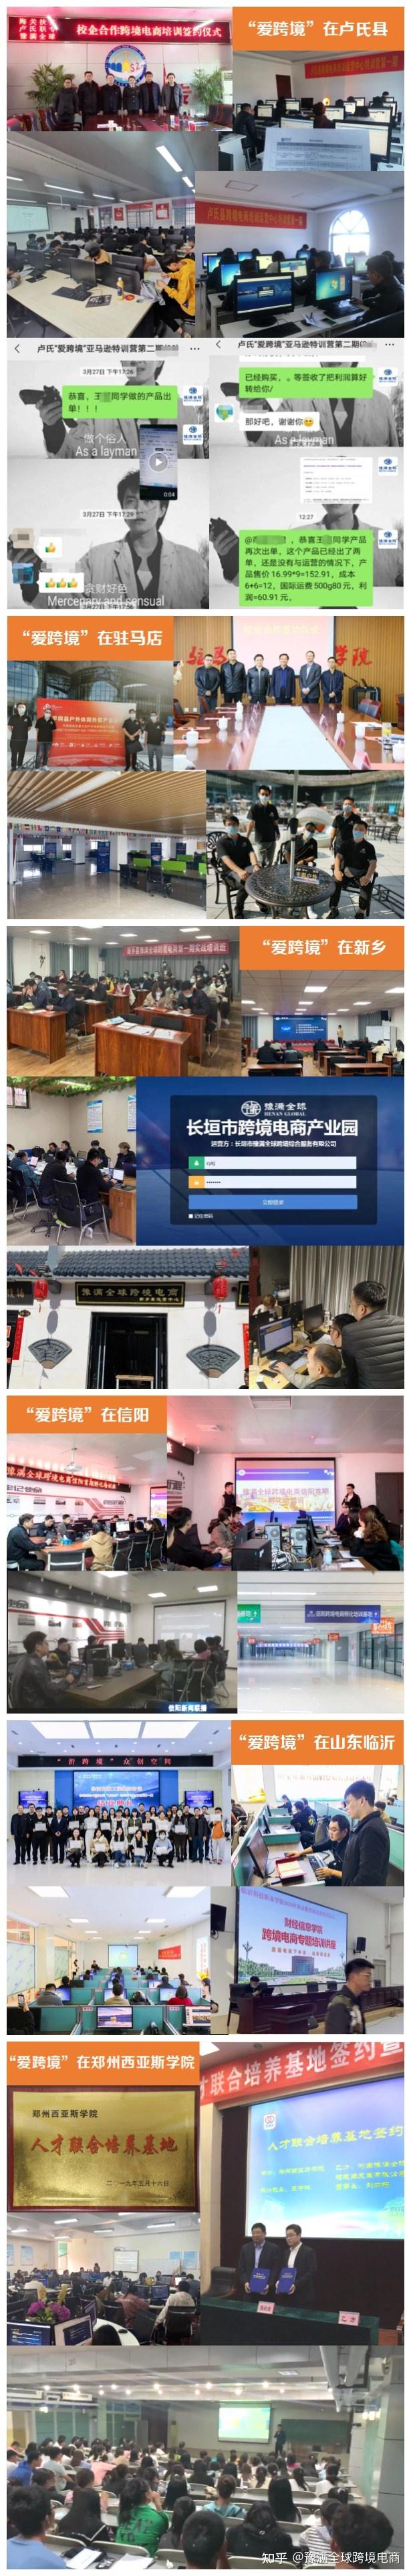 <a href='https://www.zhouxiaohui.cn/kuajing/
' target='_blank'>跨境电商</a>除了做运营，还有这个赚钱方式可行-第2张图片-周小辉博客